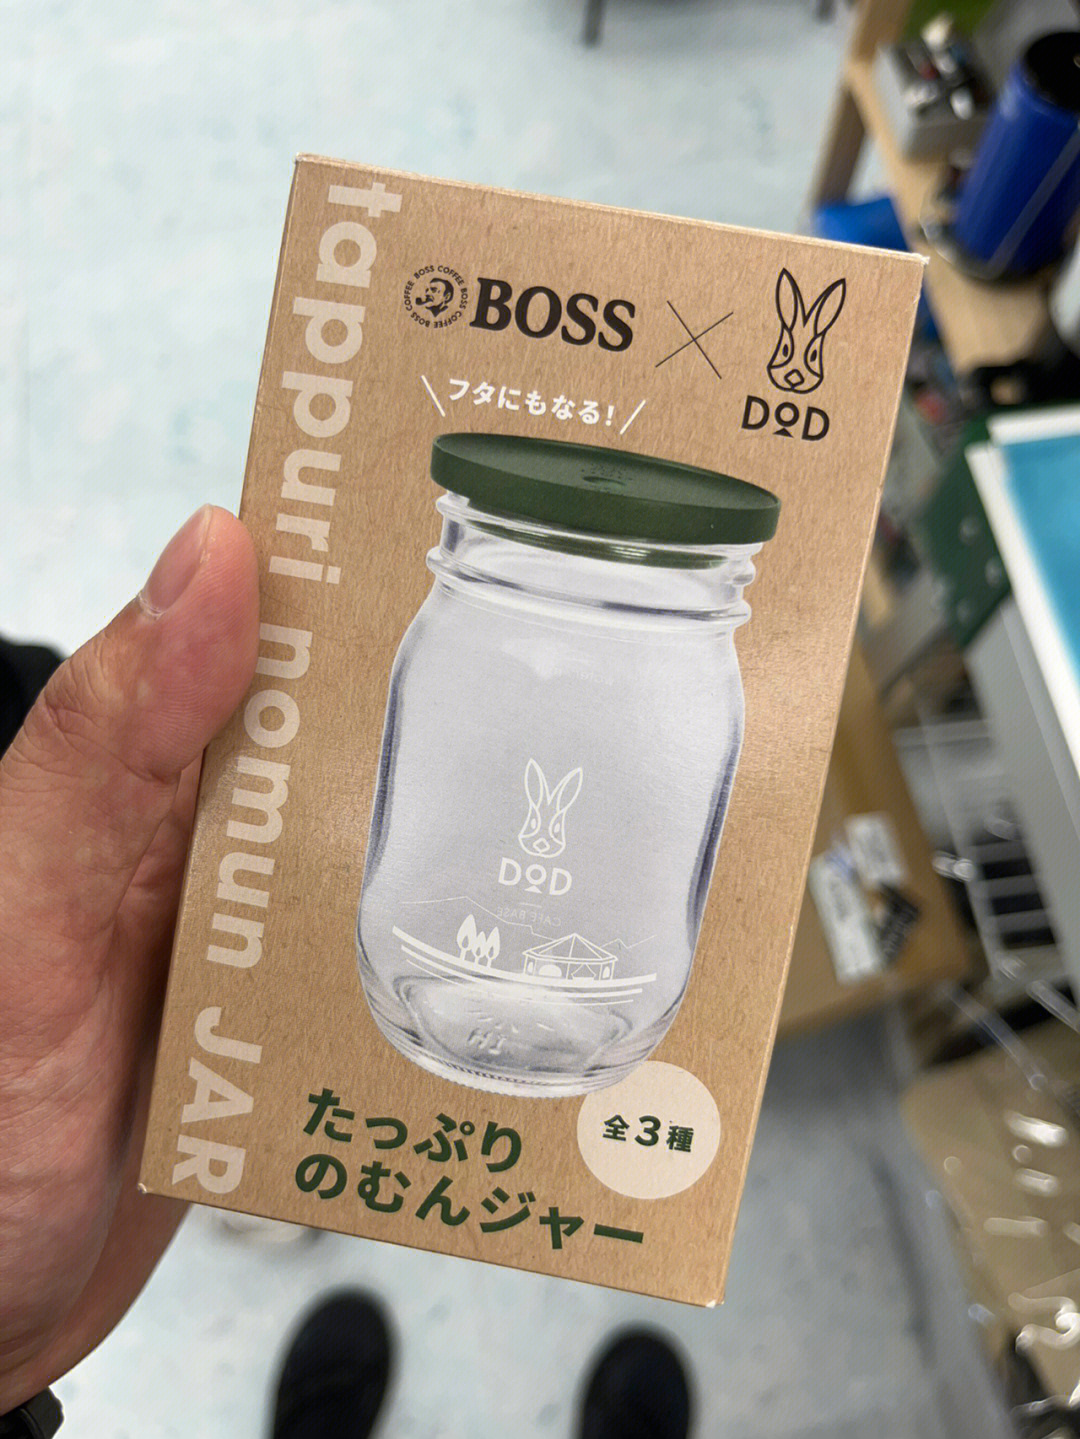 dod玻璃咖啡杯联名日本boss咖啡颜值超高